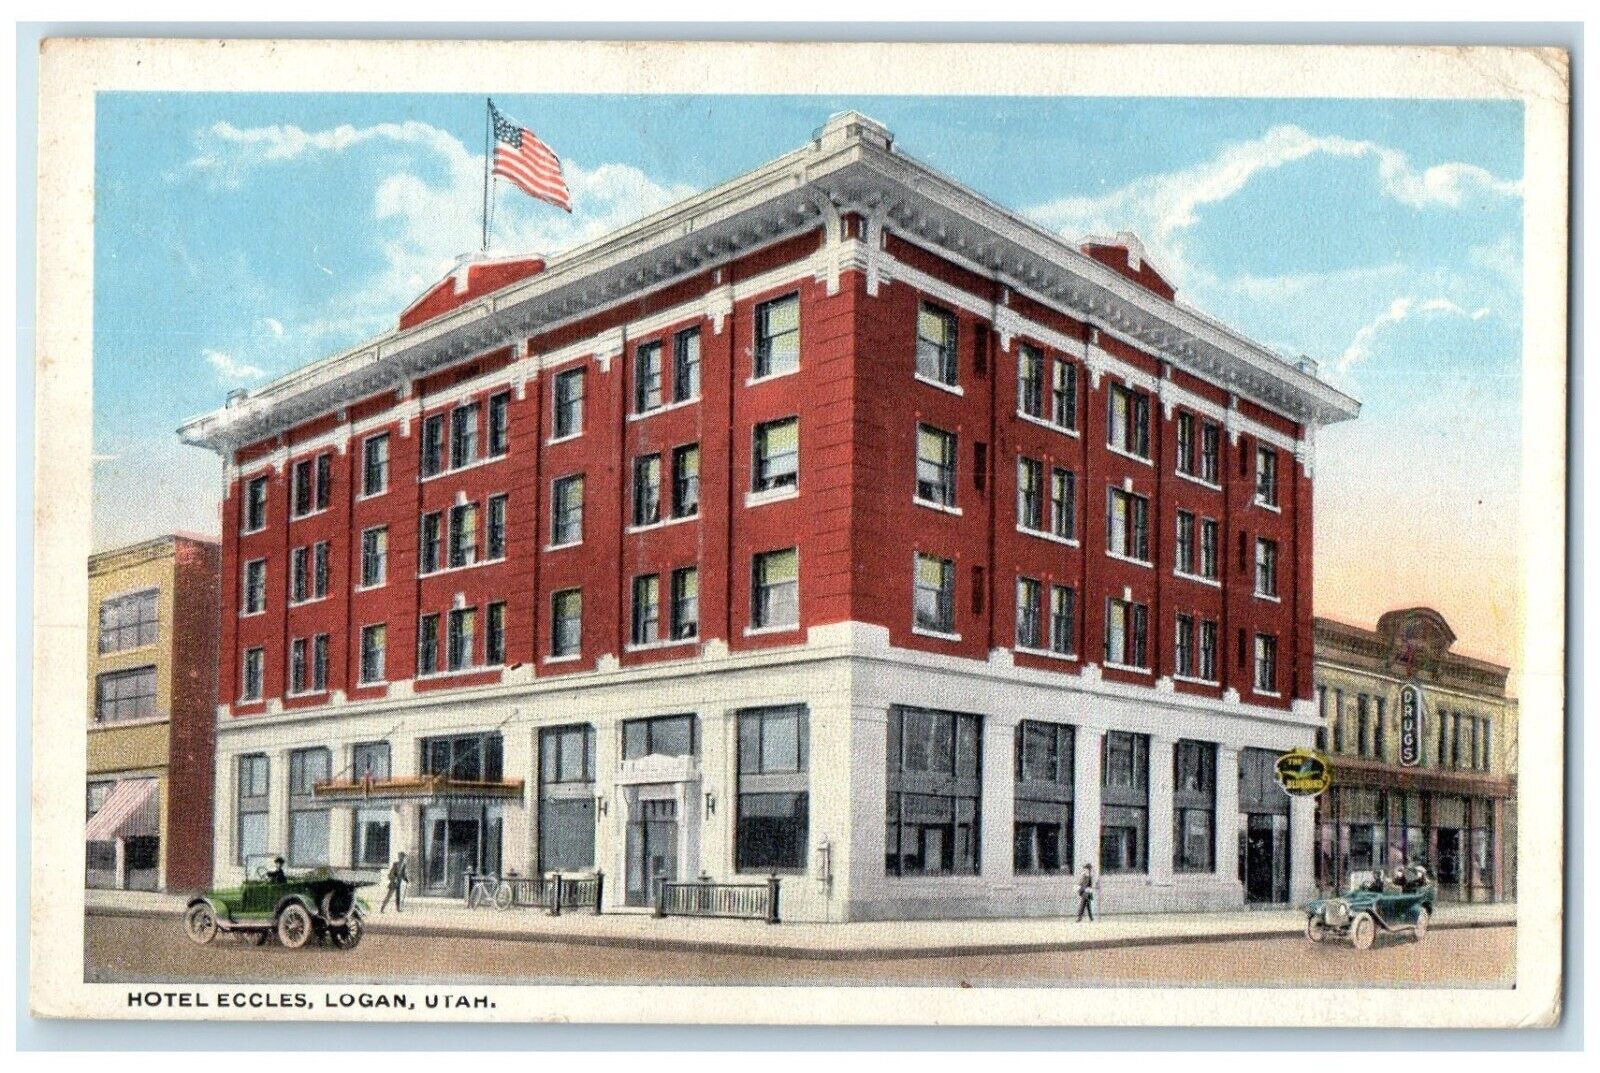 1922 Hotels Eccles Exterior View Building Logan Utah UT Vintage Antique Postcard